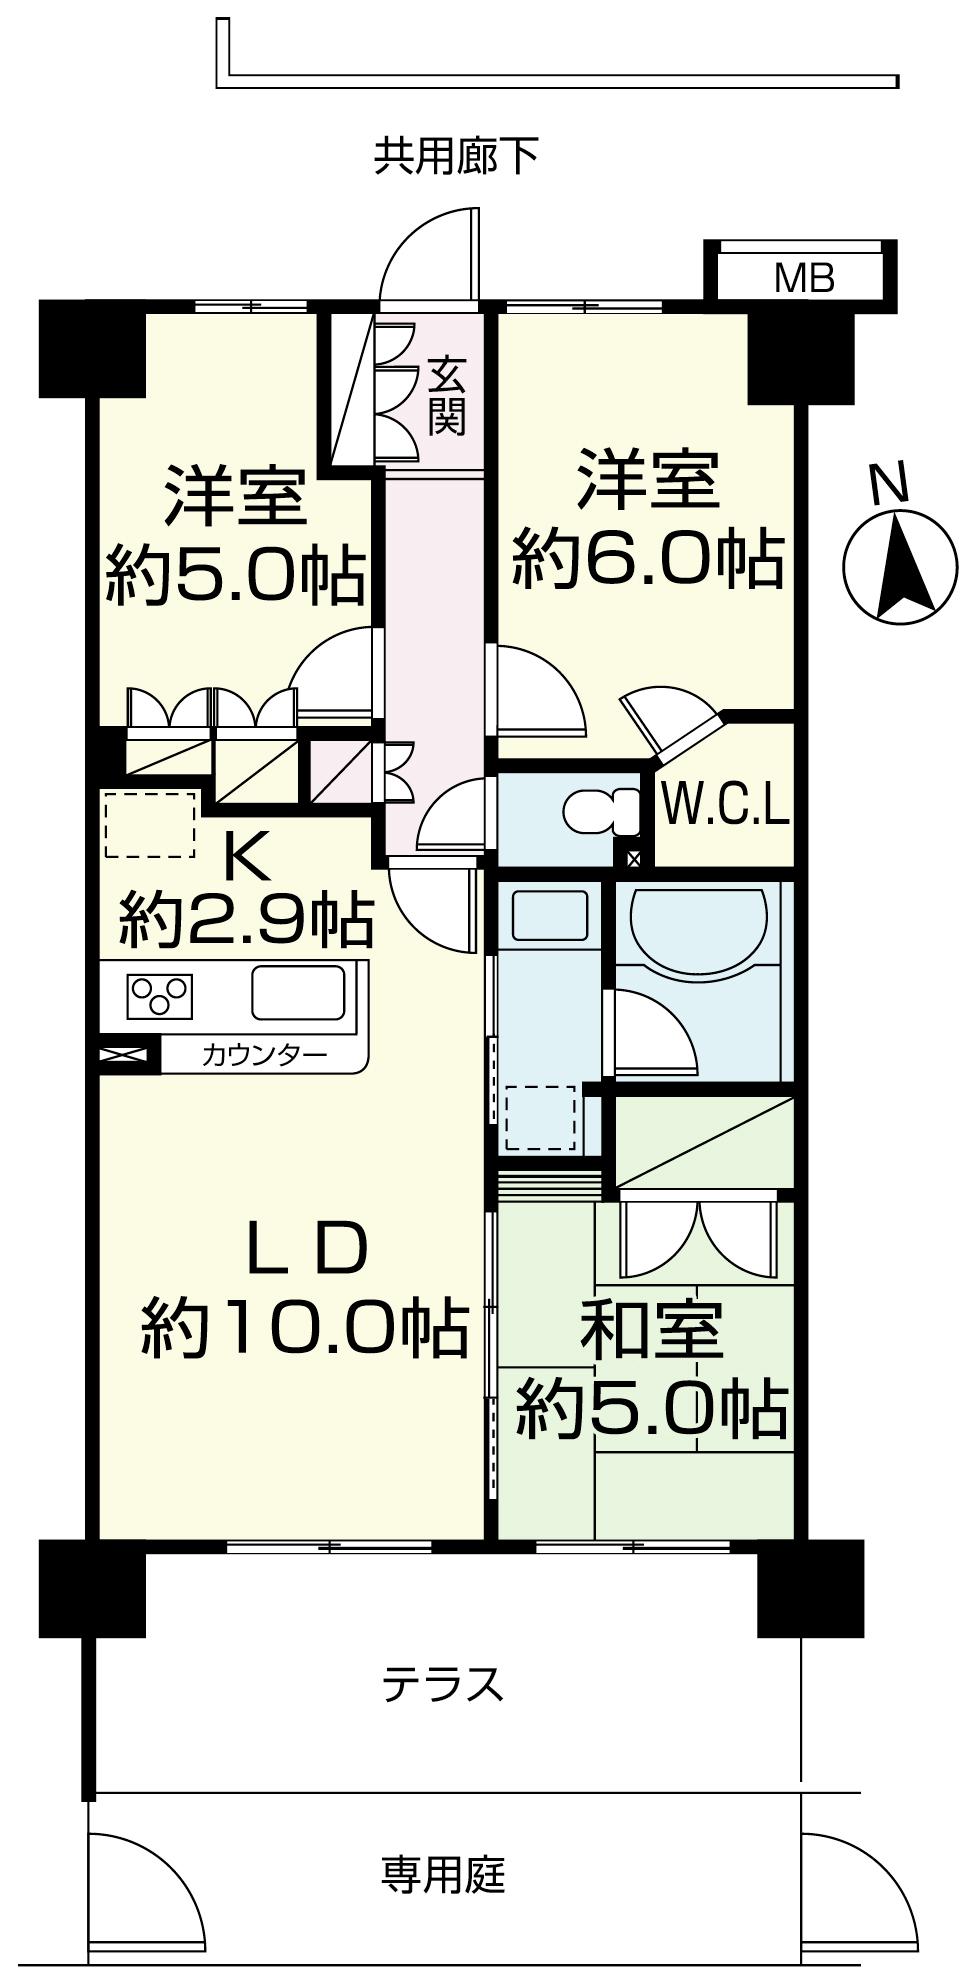 Floor plan. 3LDK, Price 16.8 million yen, Footprint 63 sq m